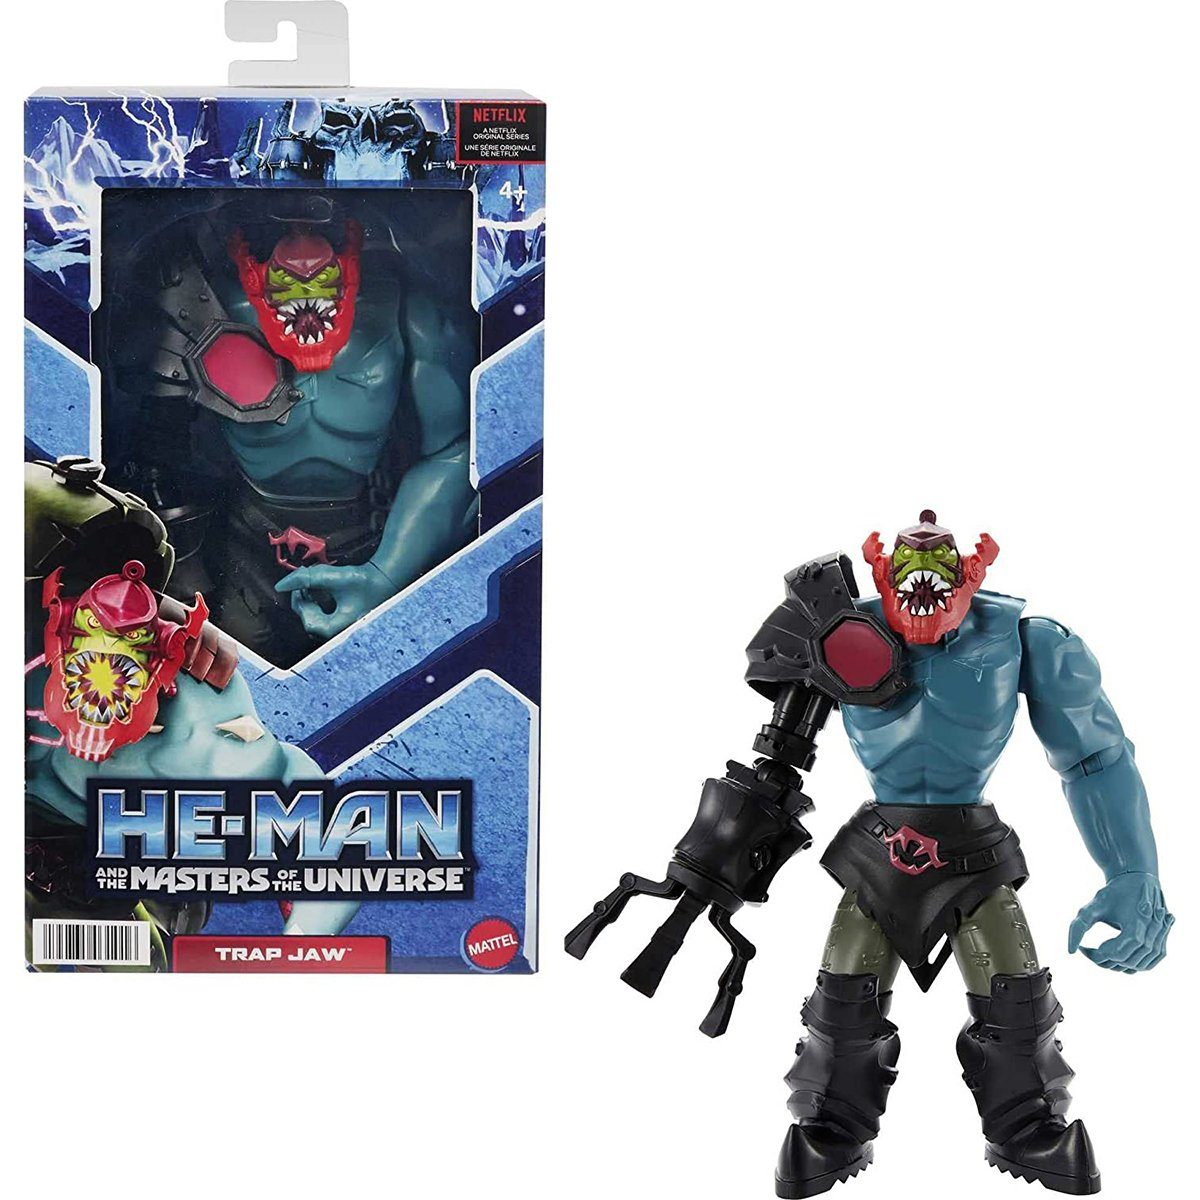 Mattel® Actionfigur He-Man and The Masters Of The Universe, (Figur mit Zubehör), 22 cm Figur: Battle Armor He-Man